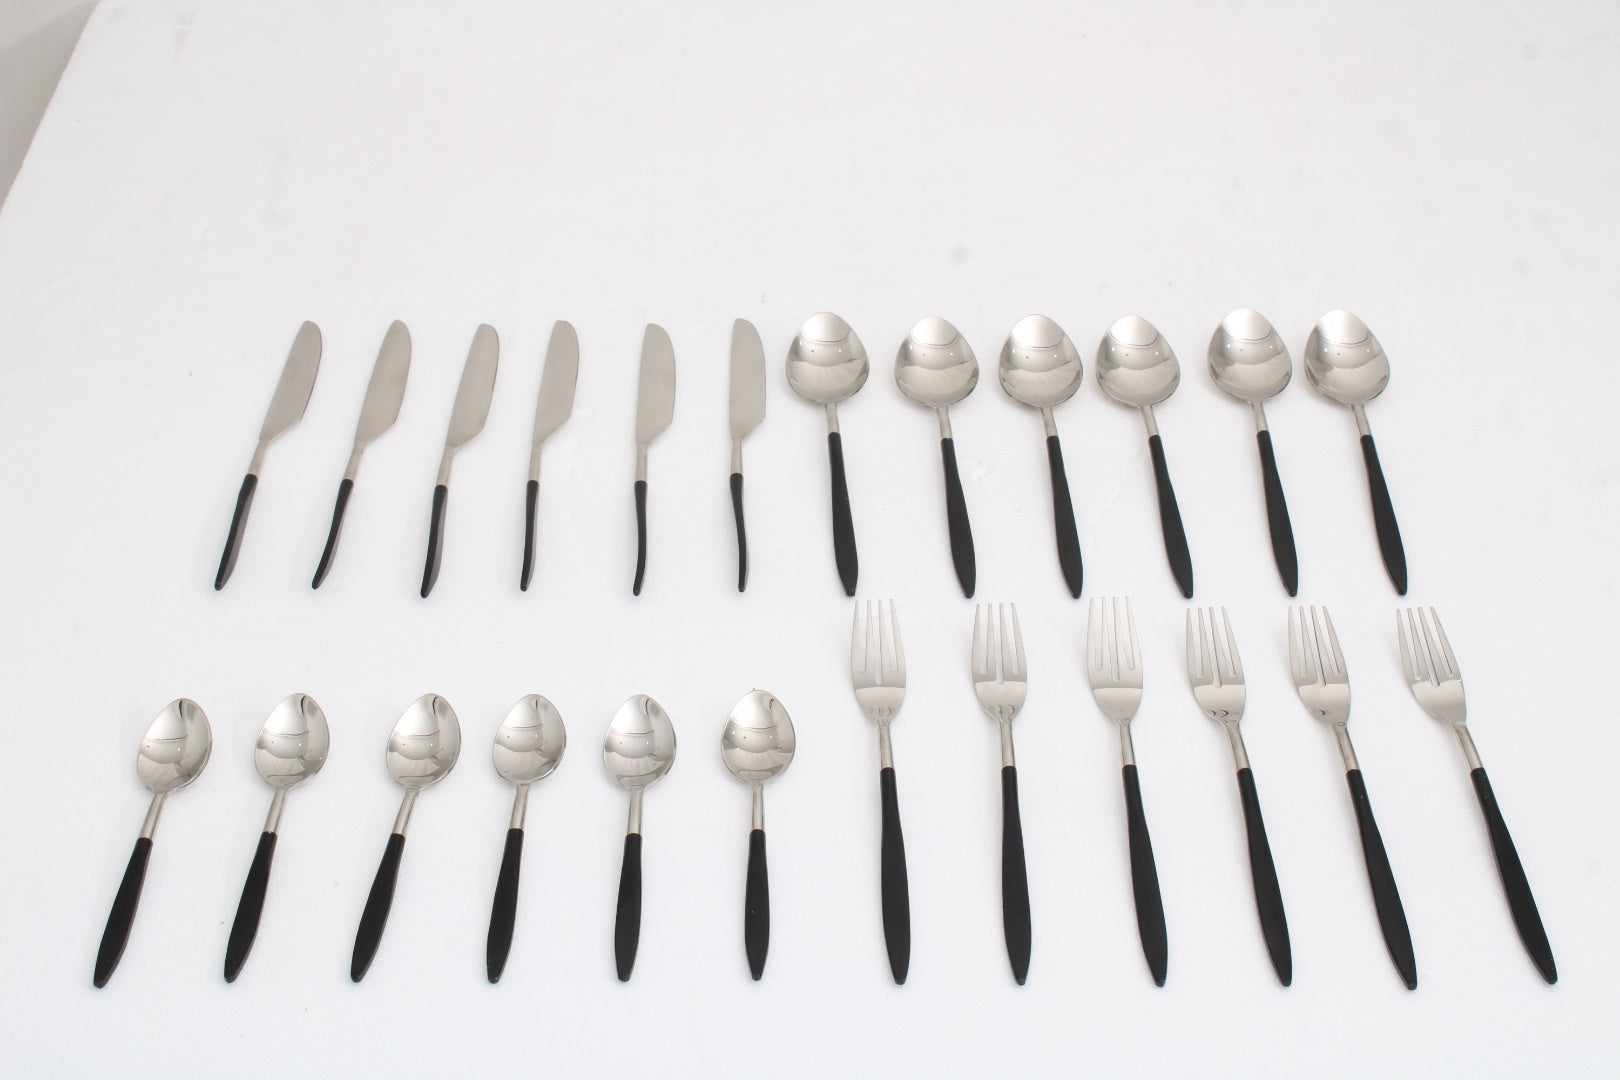 Midnight Opulence Black & Silver Cutlery Set